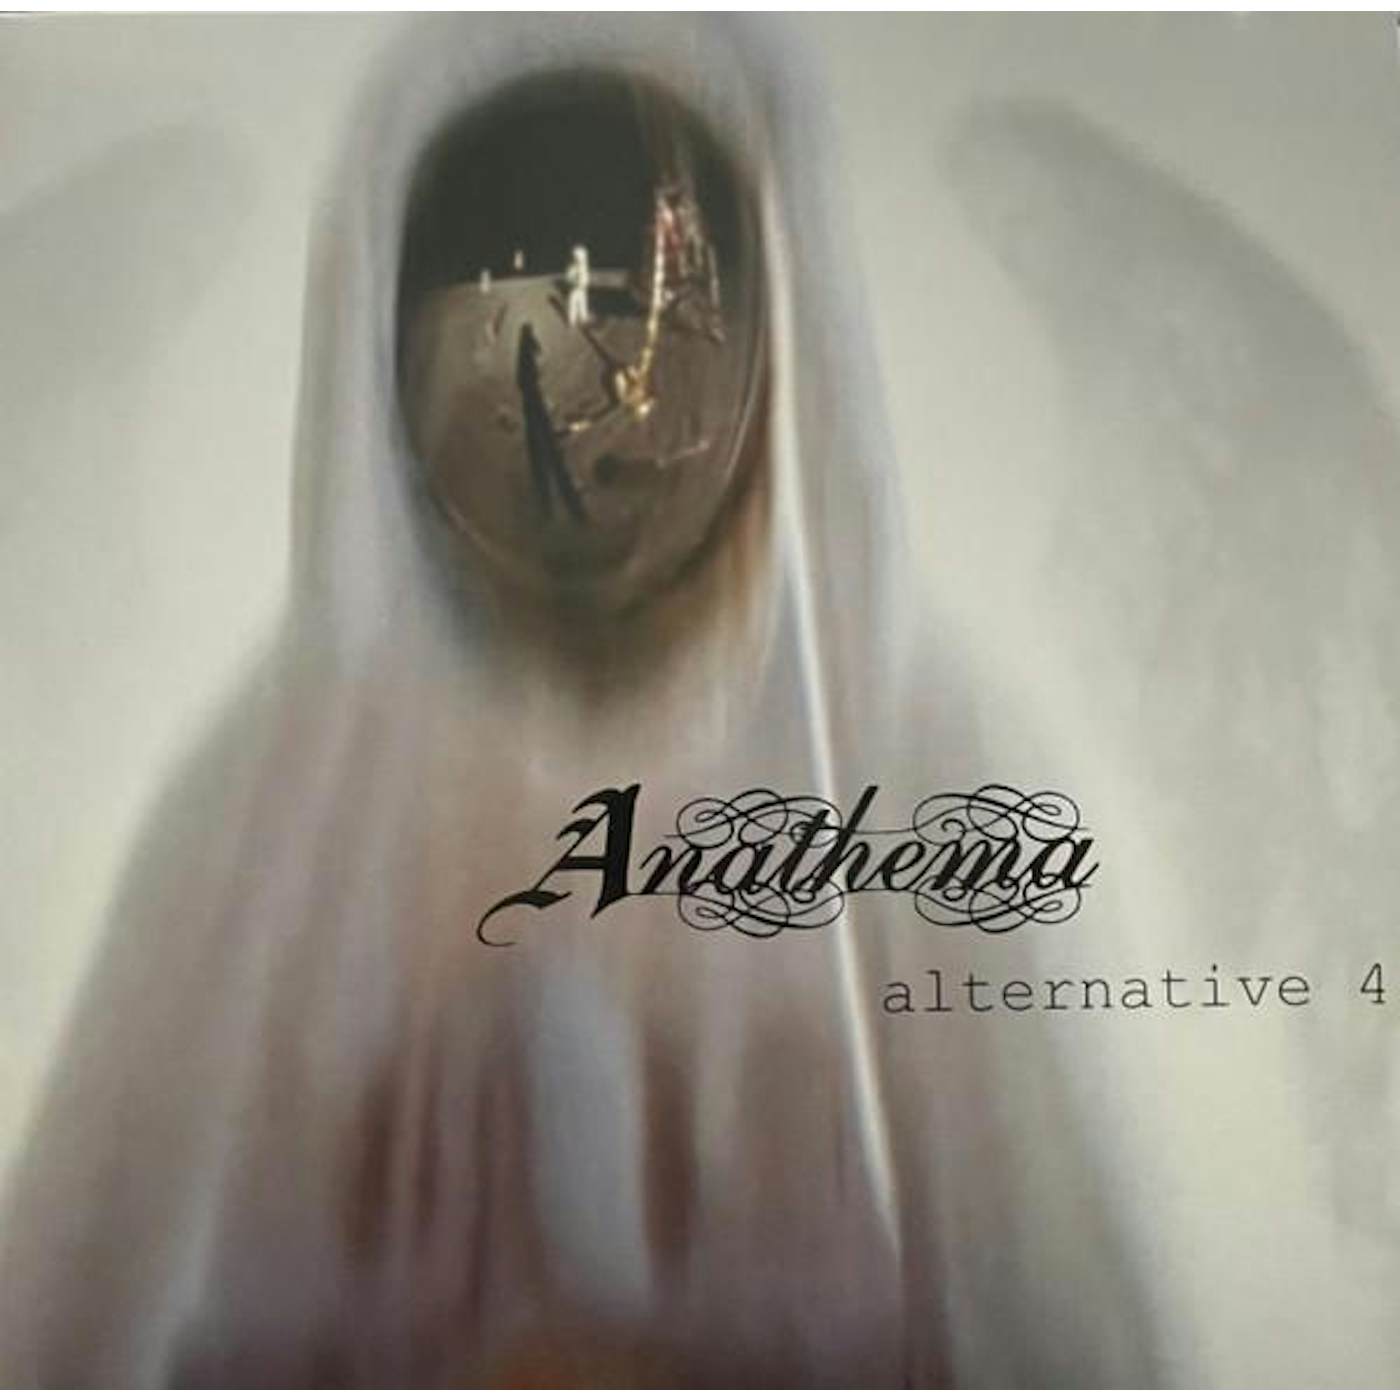 Anathema Alternative 4 (25Th Anniversary) (Marble) Vinyl Record